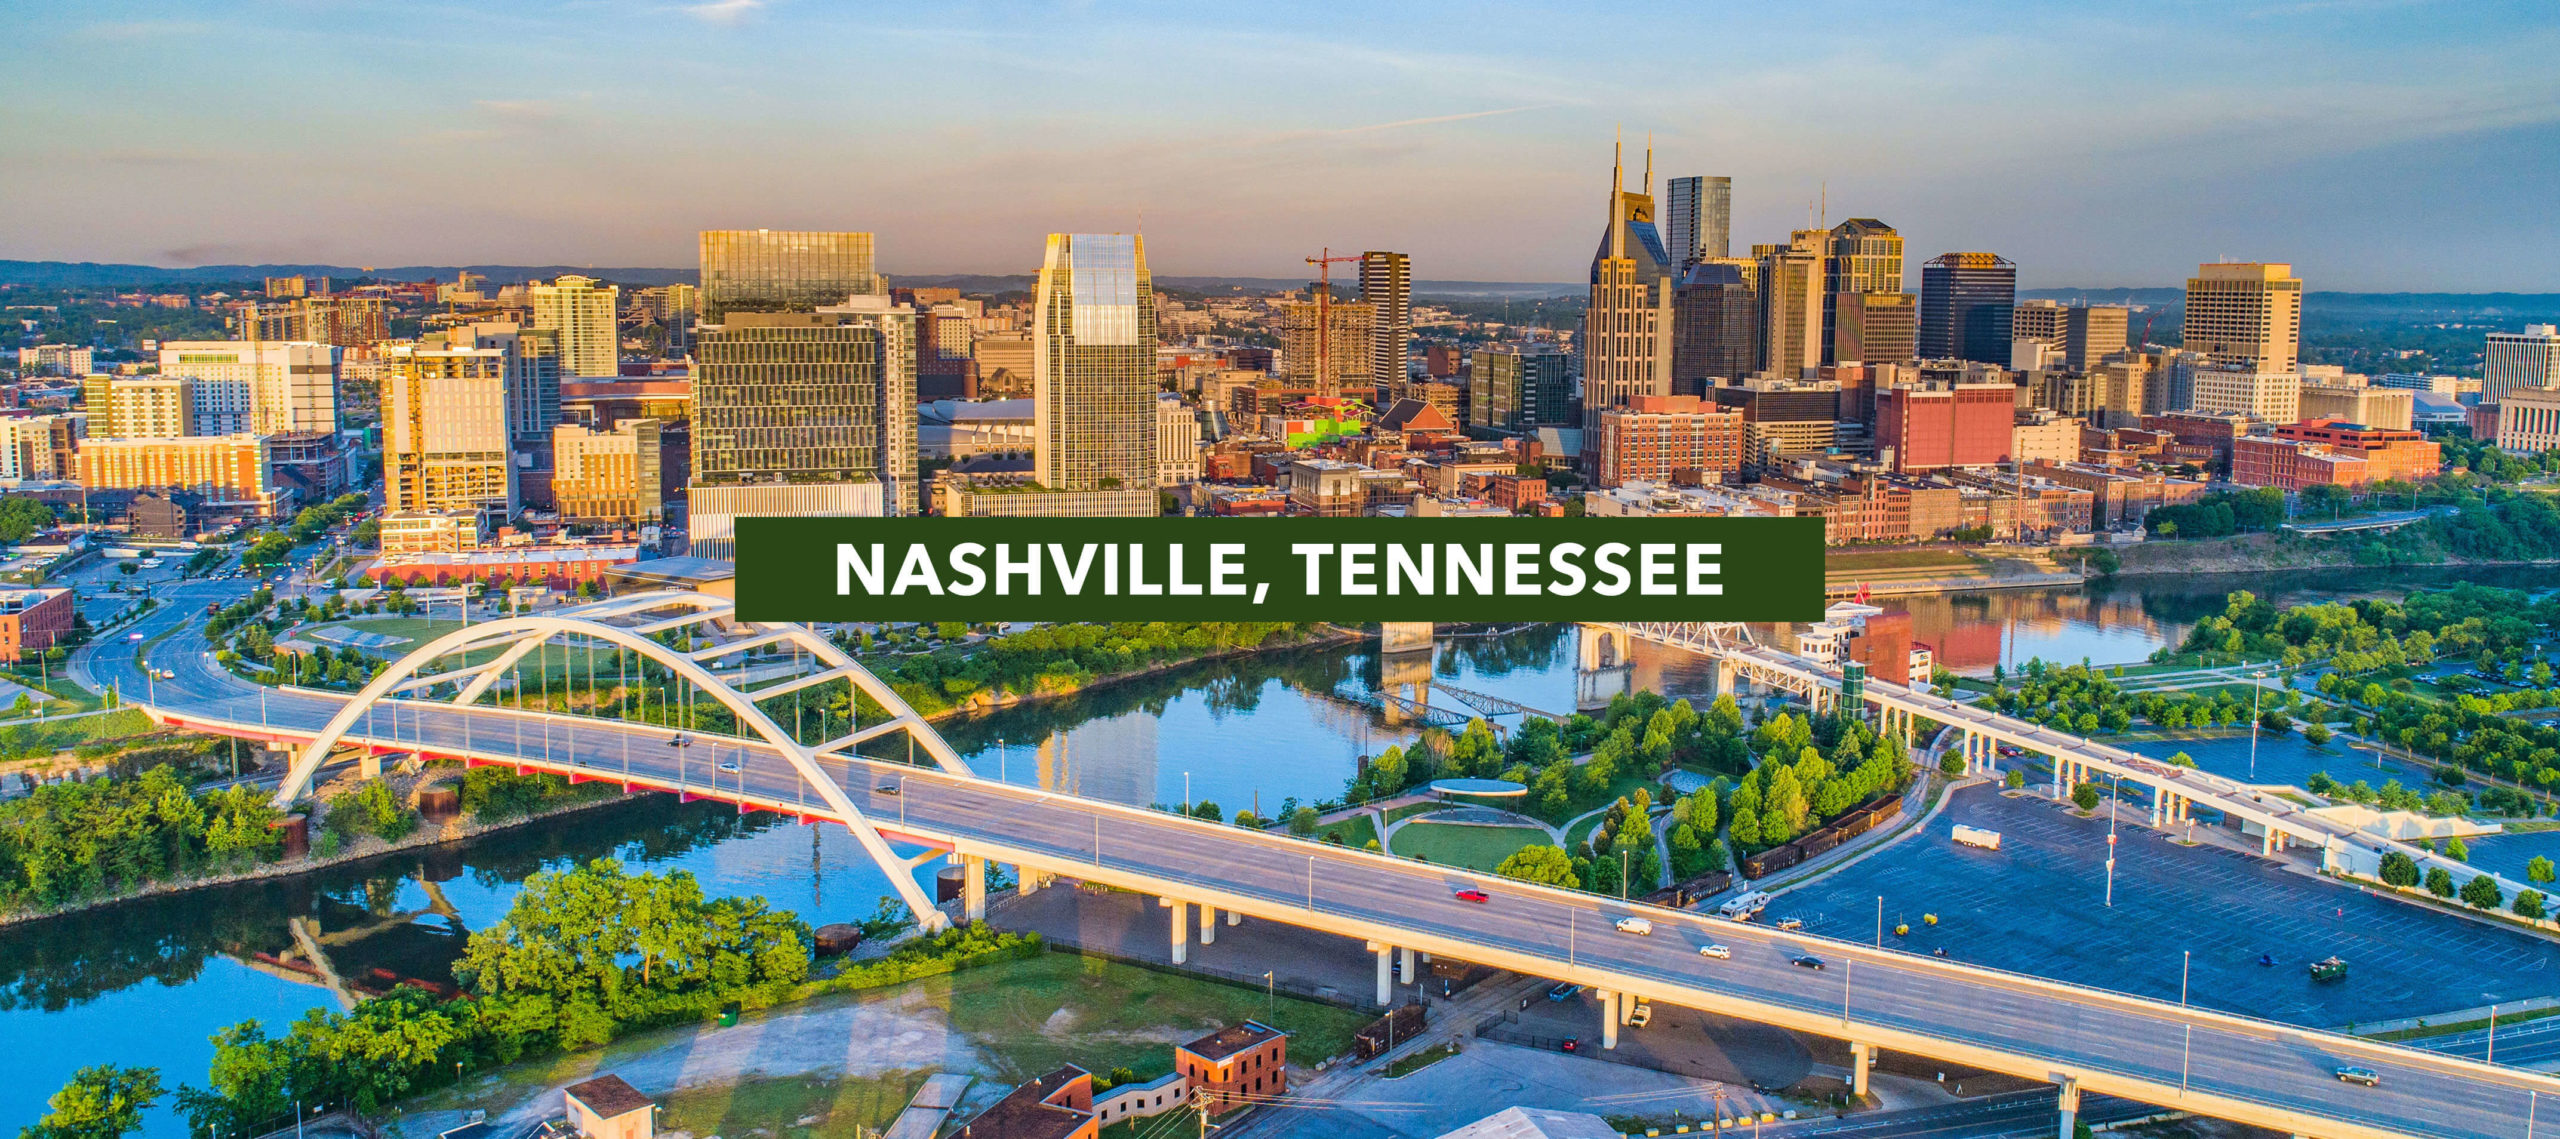 Image of Downtown Nashville skyline